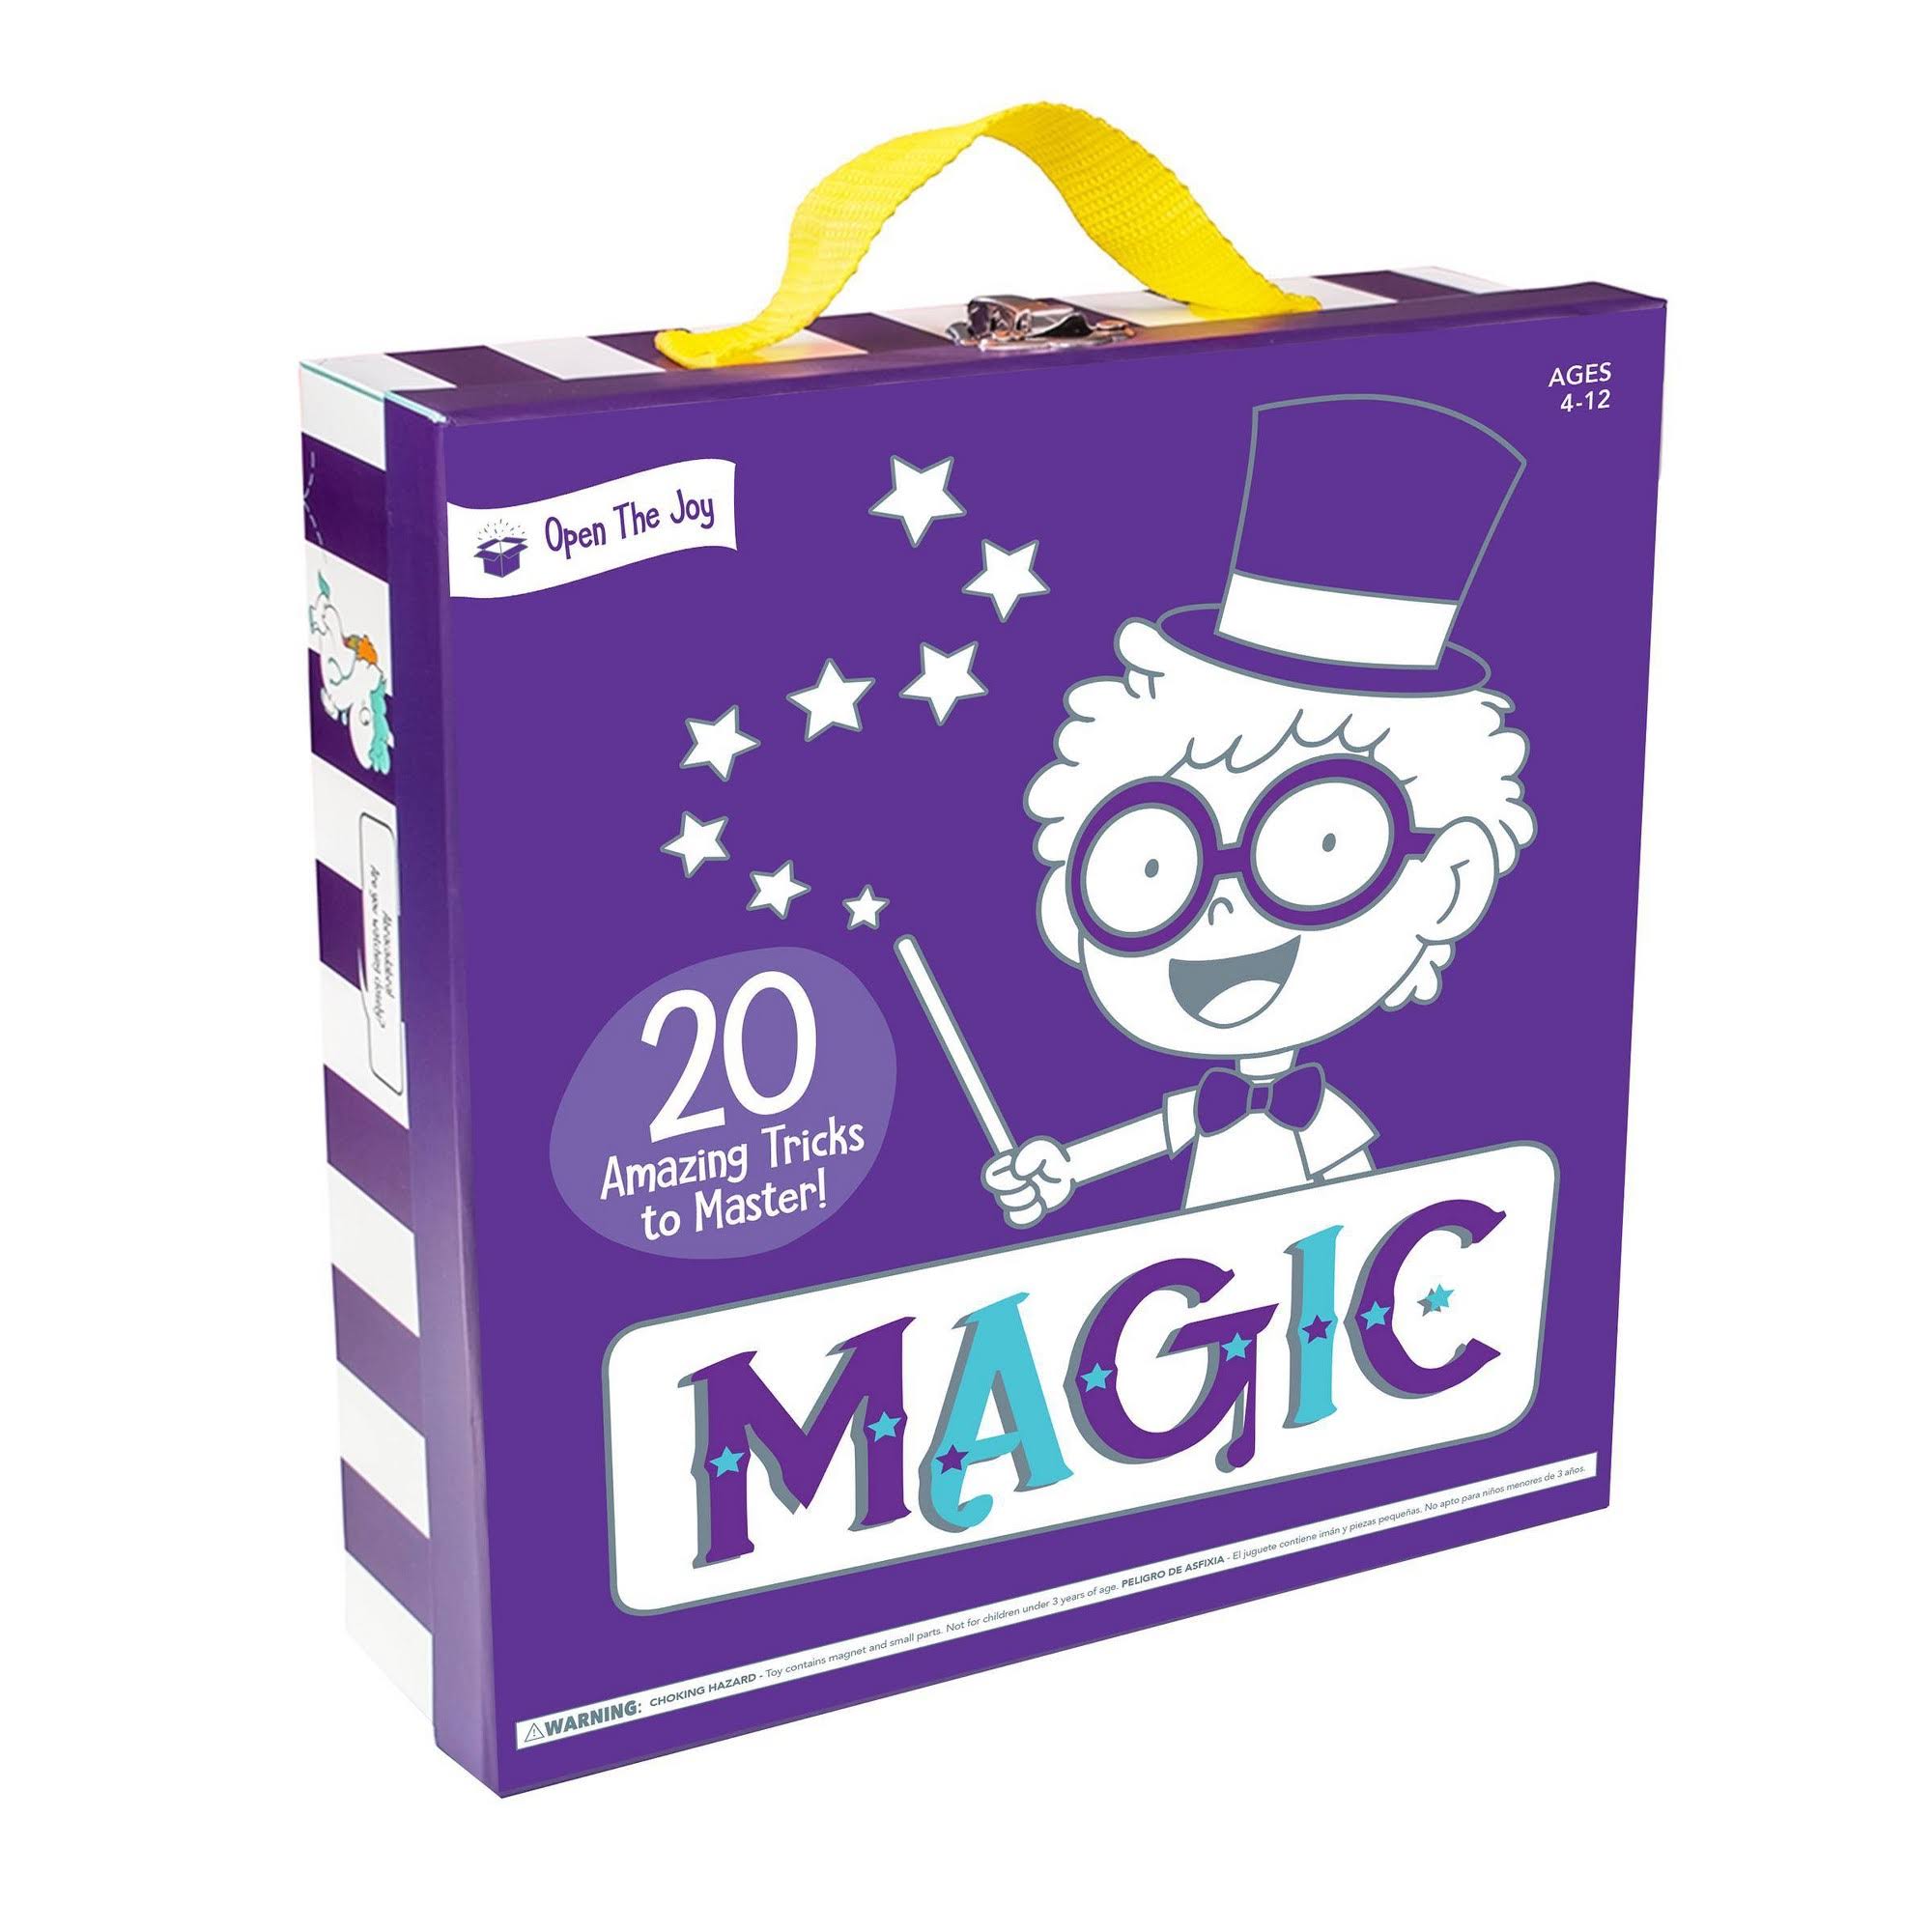 Open The Joy Magic Activity Kit in Purple at Nordstrom Rack